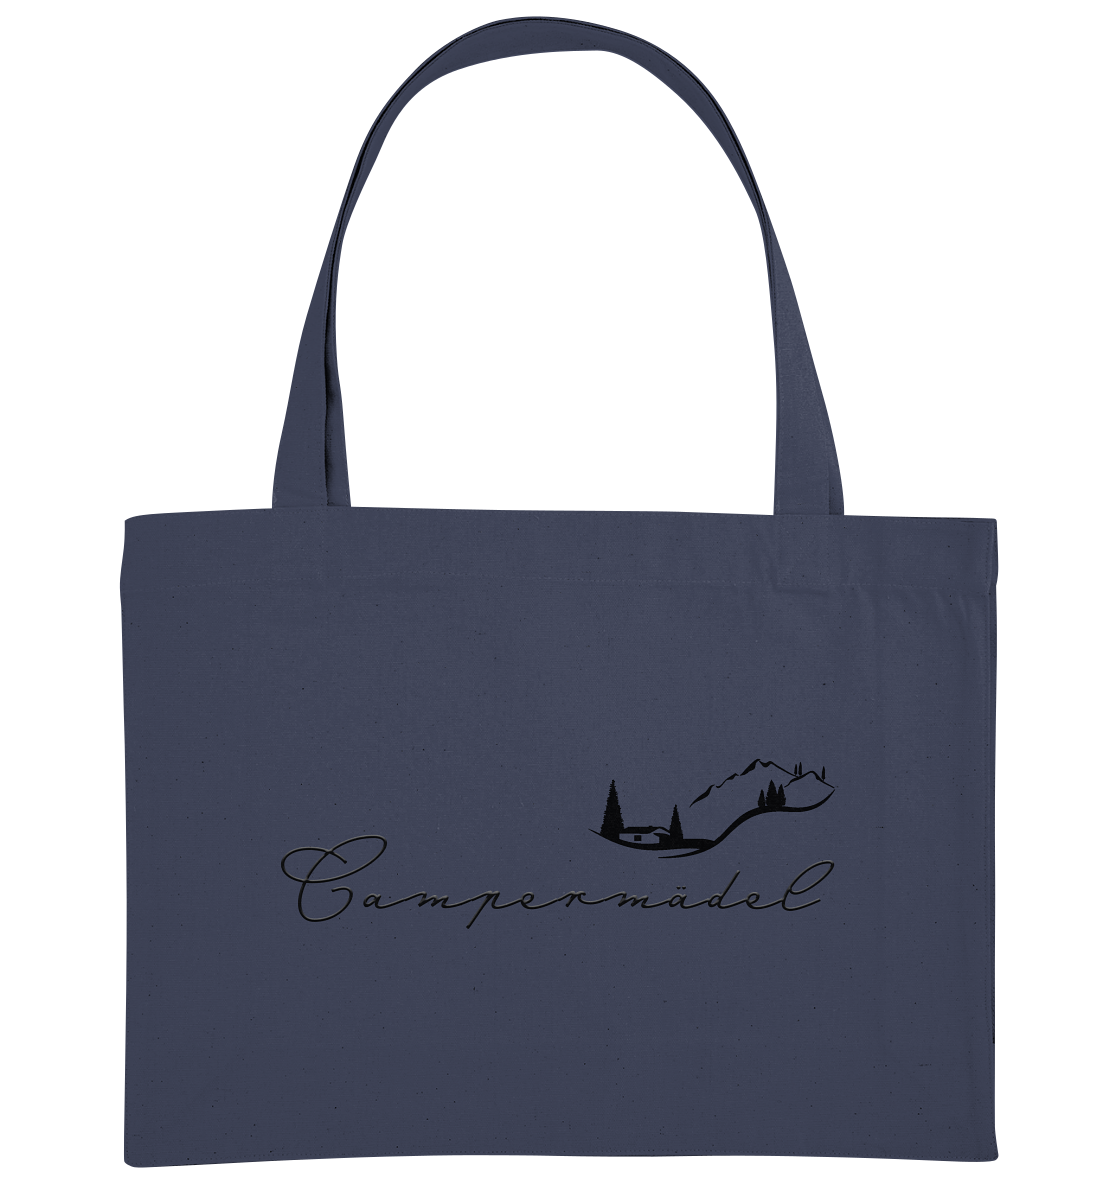 Campermädel - Organic Shopping-Bag